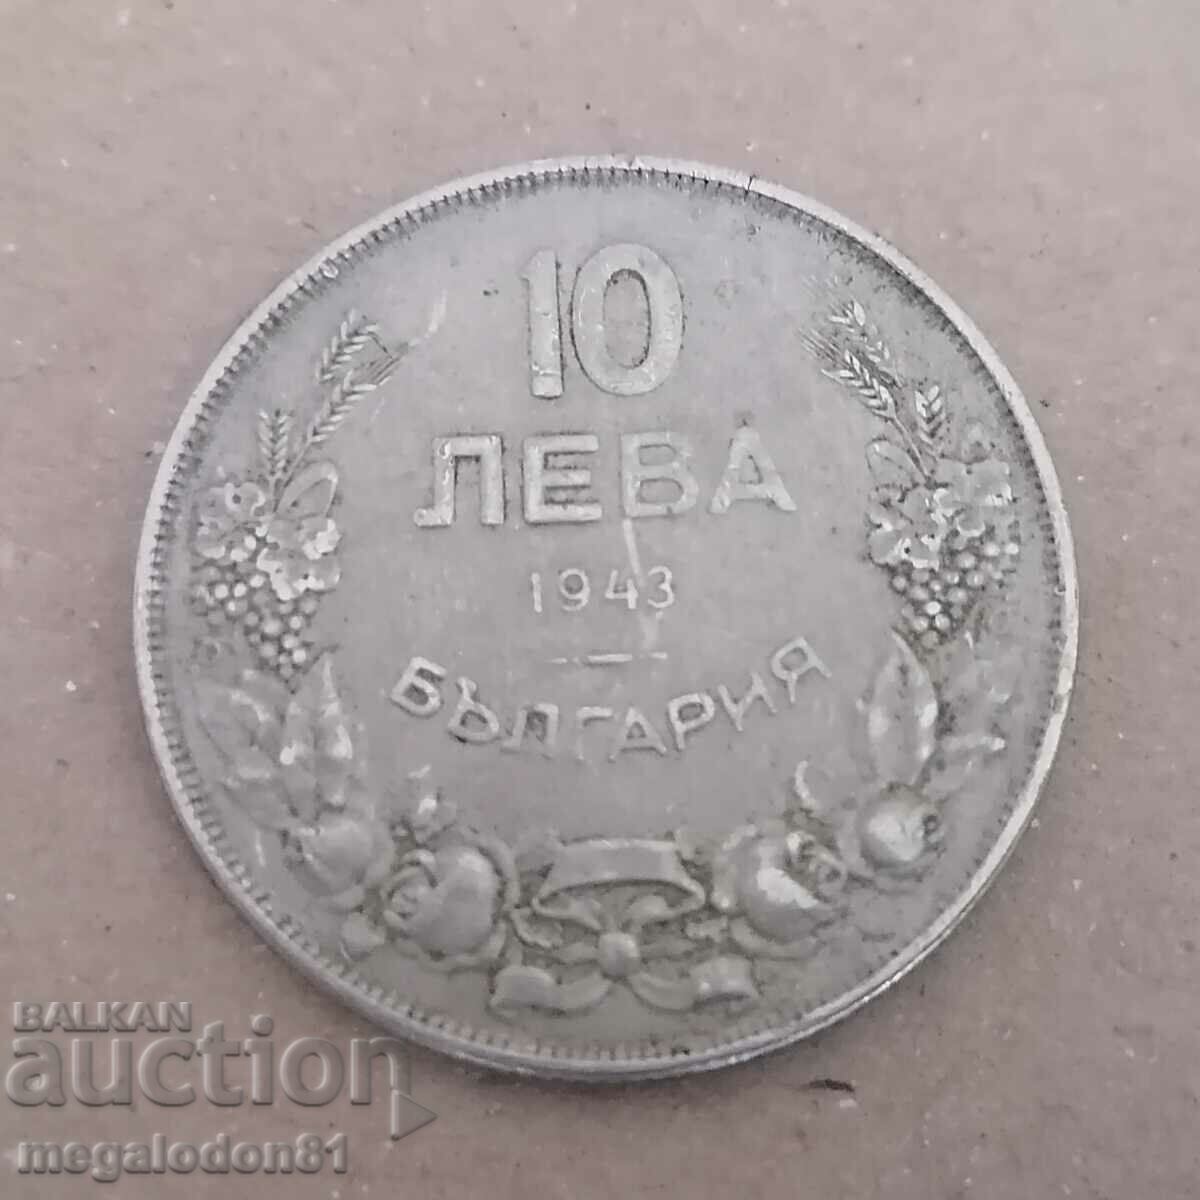 Bulgaria - 10 BGN, 1943